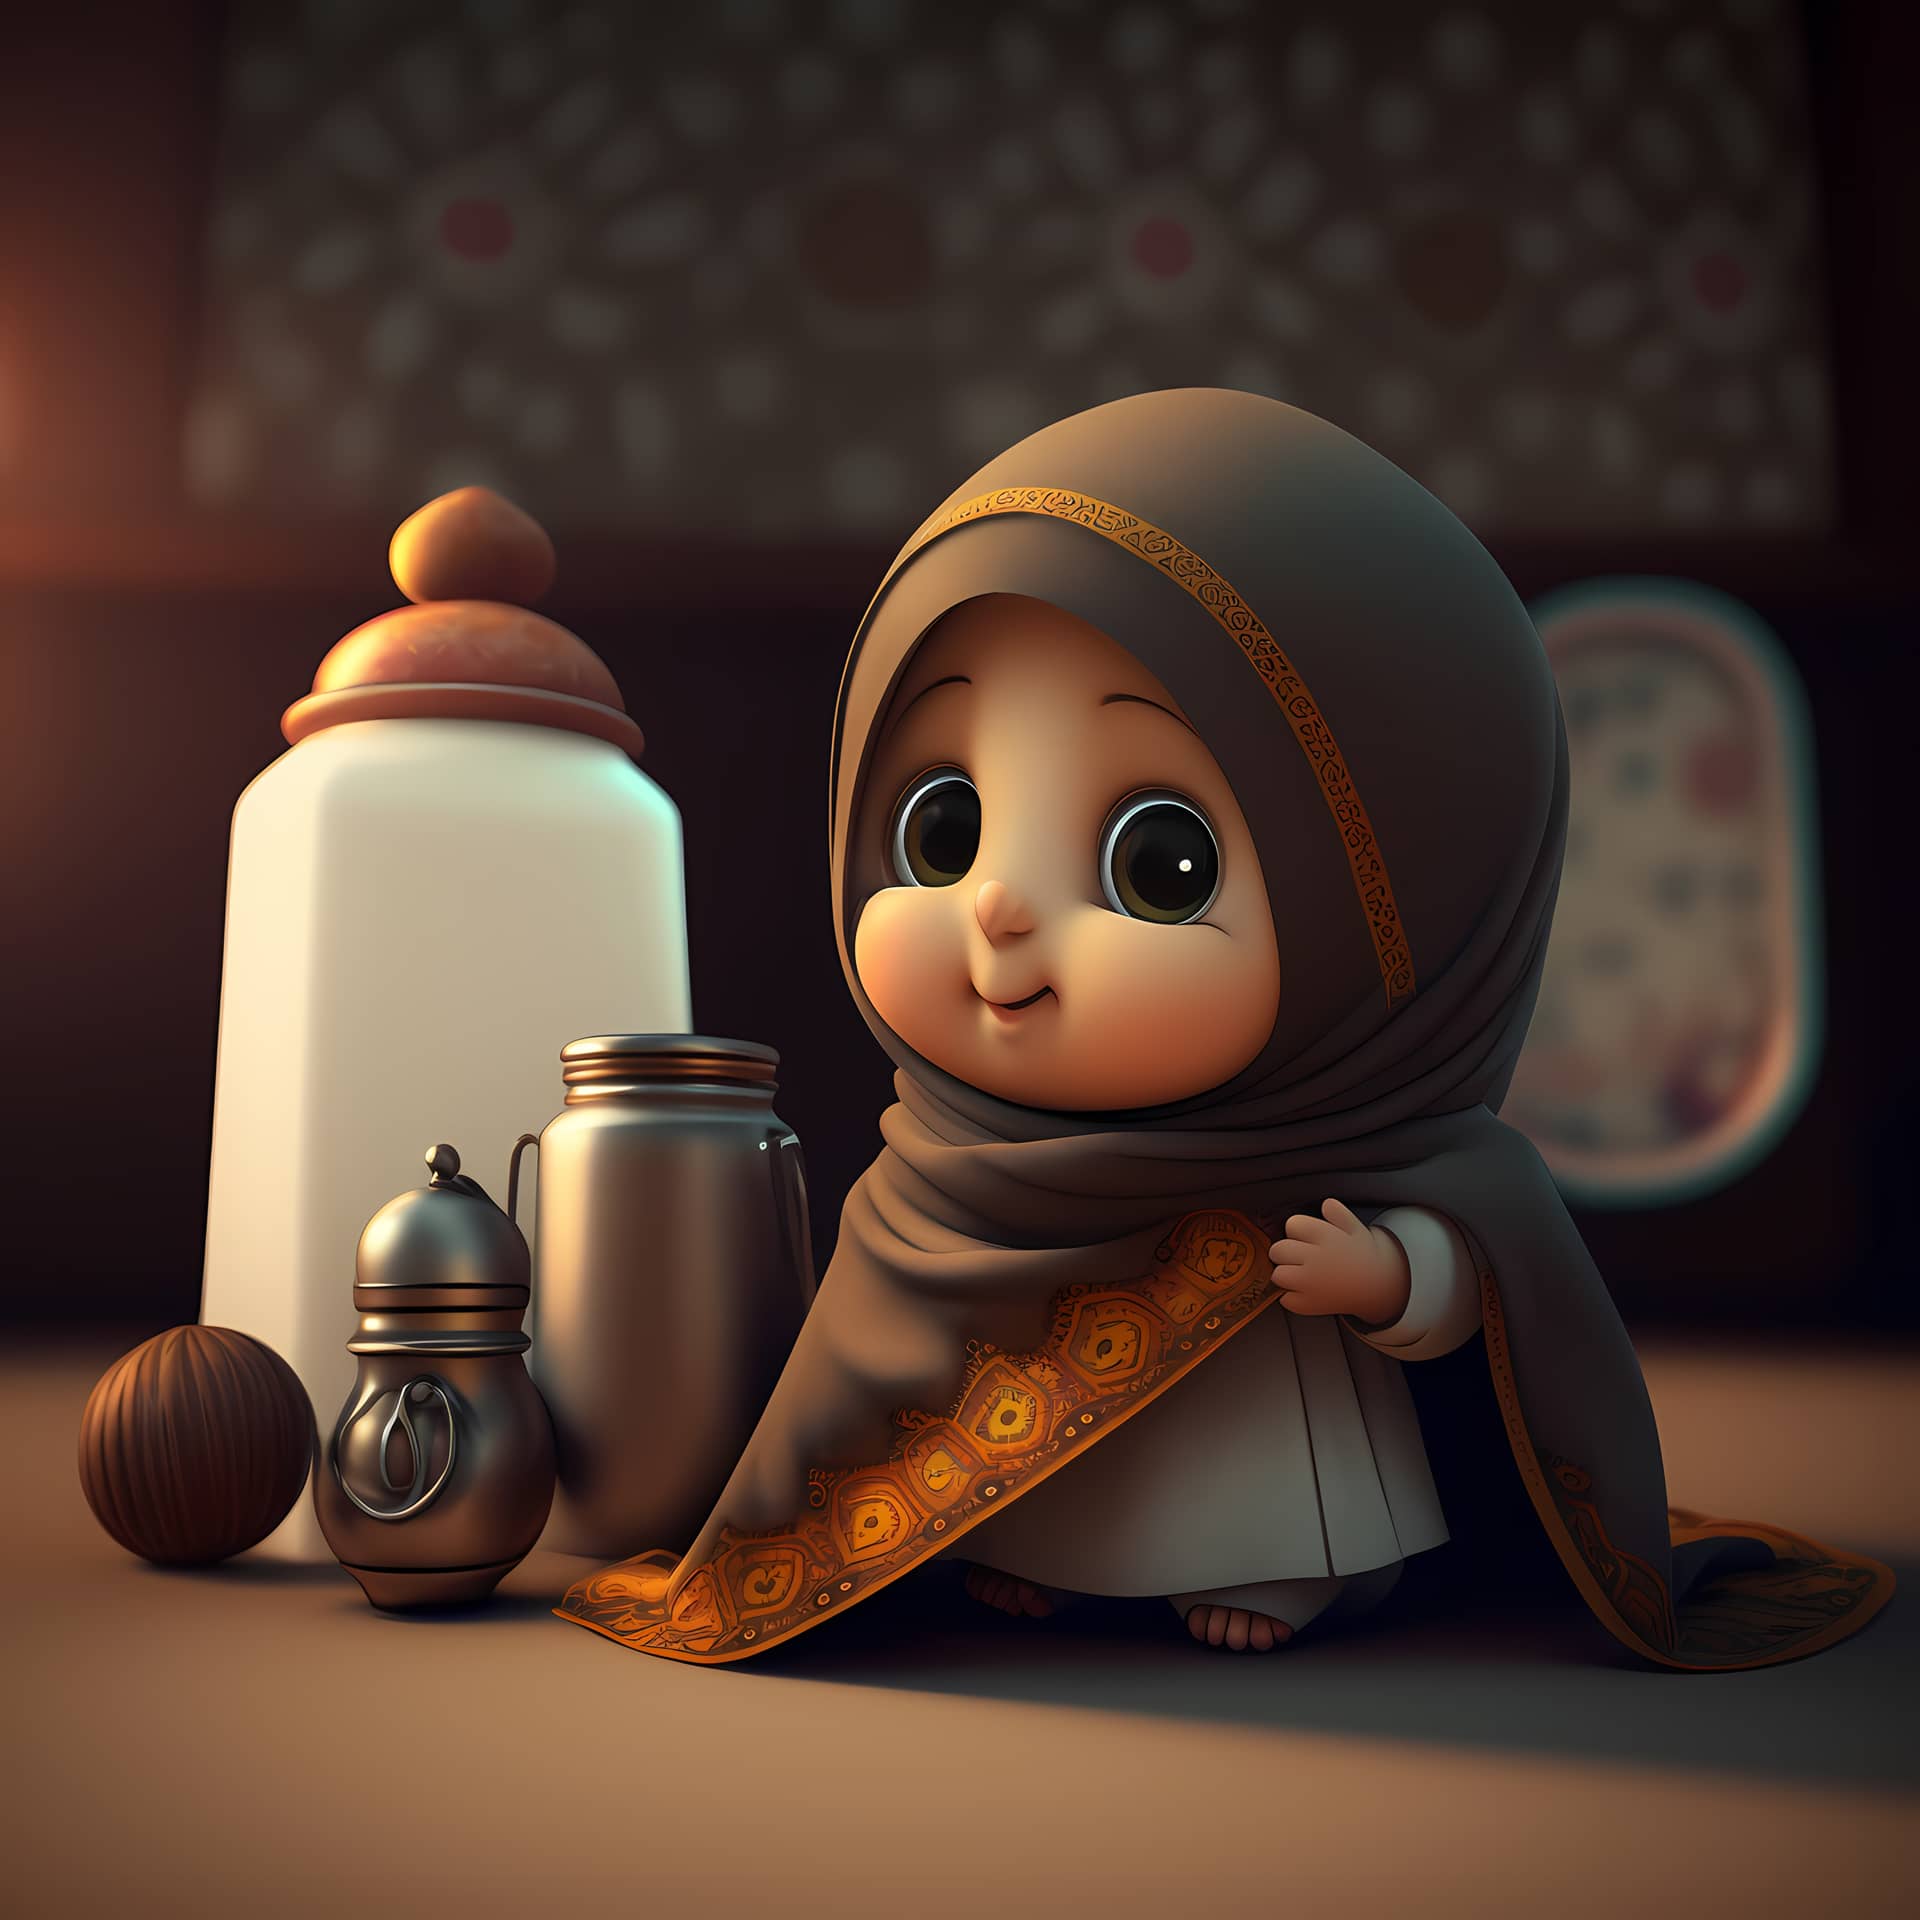 Adorable cute muslim children cartoon character 3d rendering expressive image